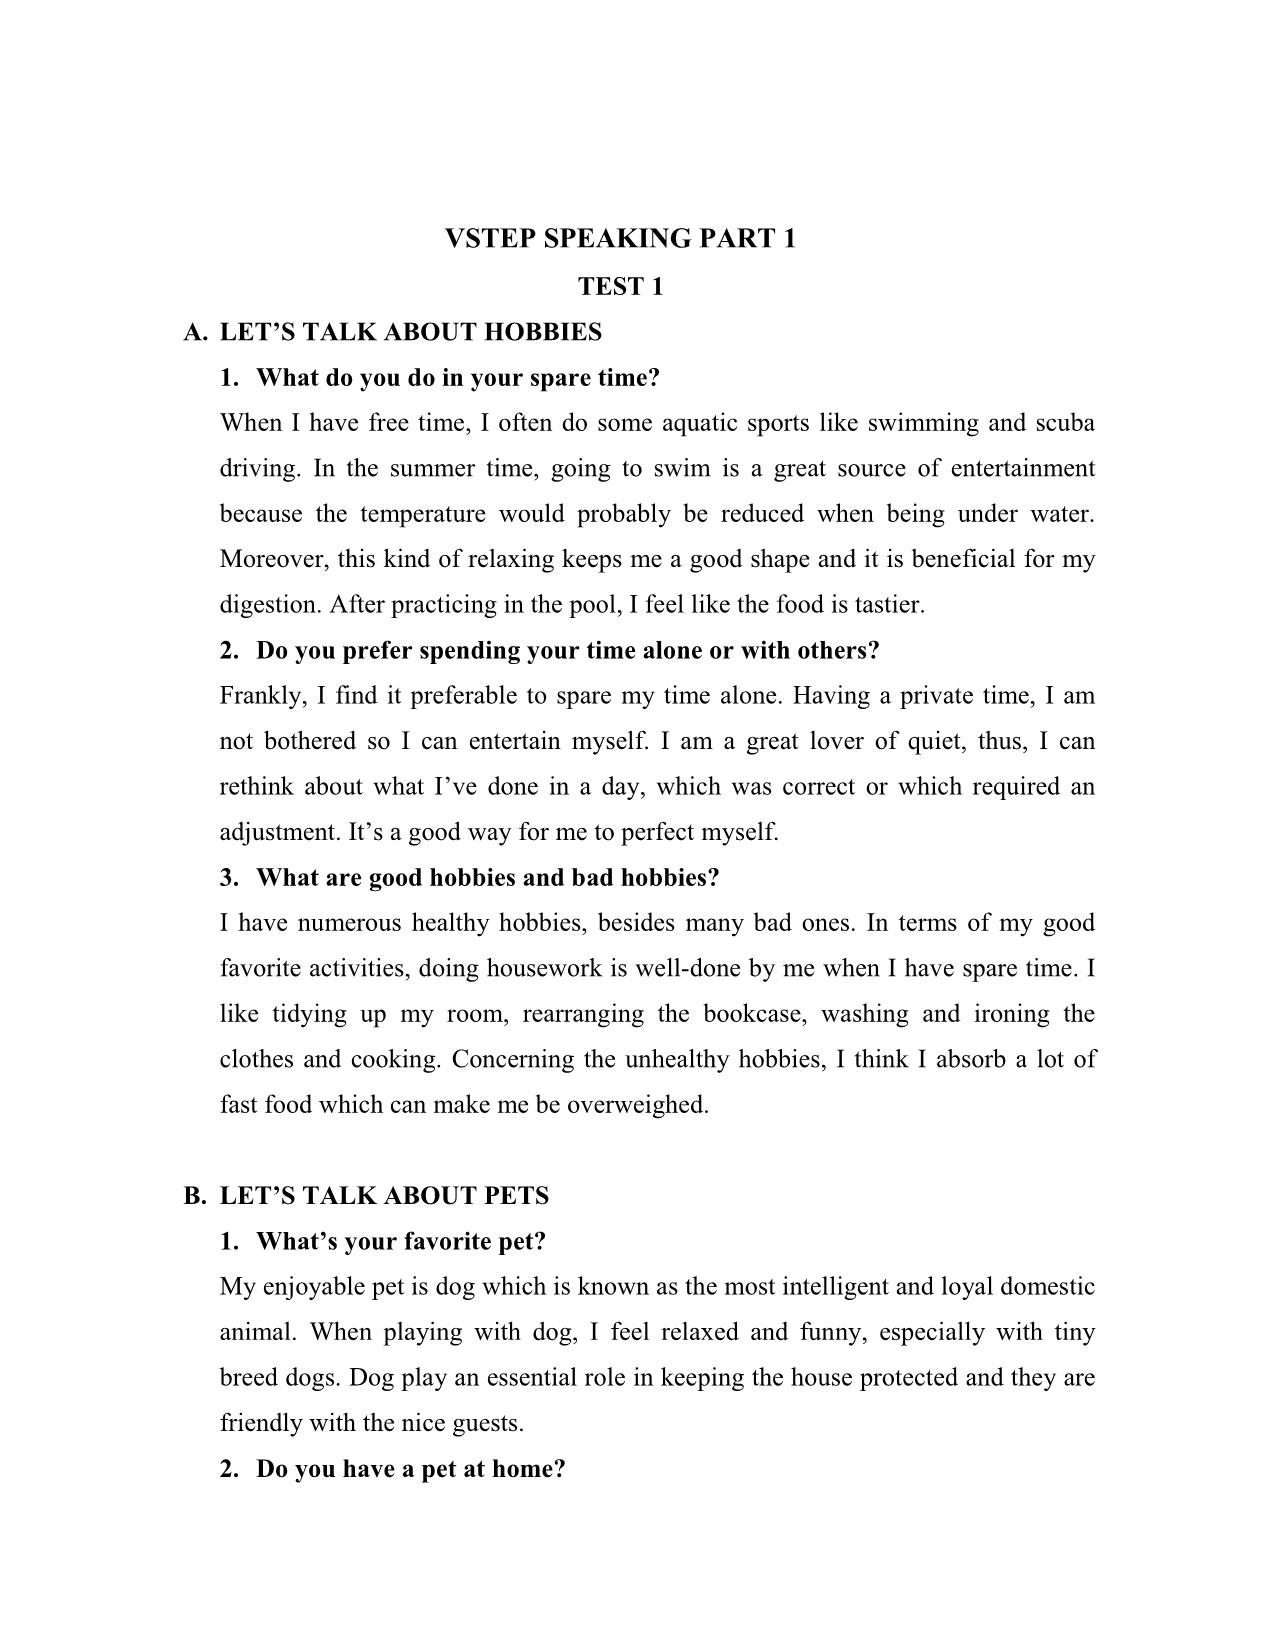 Tiếng Anh - Vstep speaking part 1 trang 1